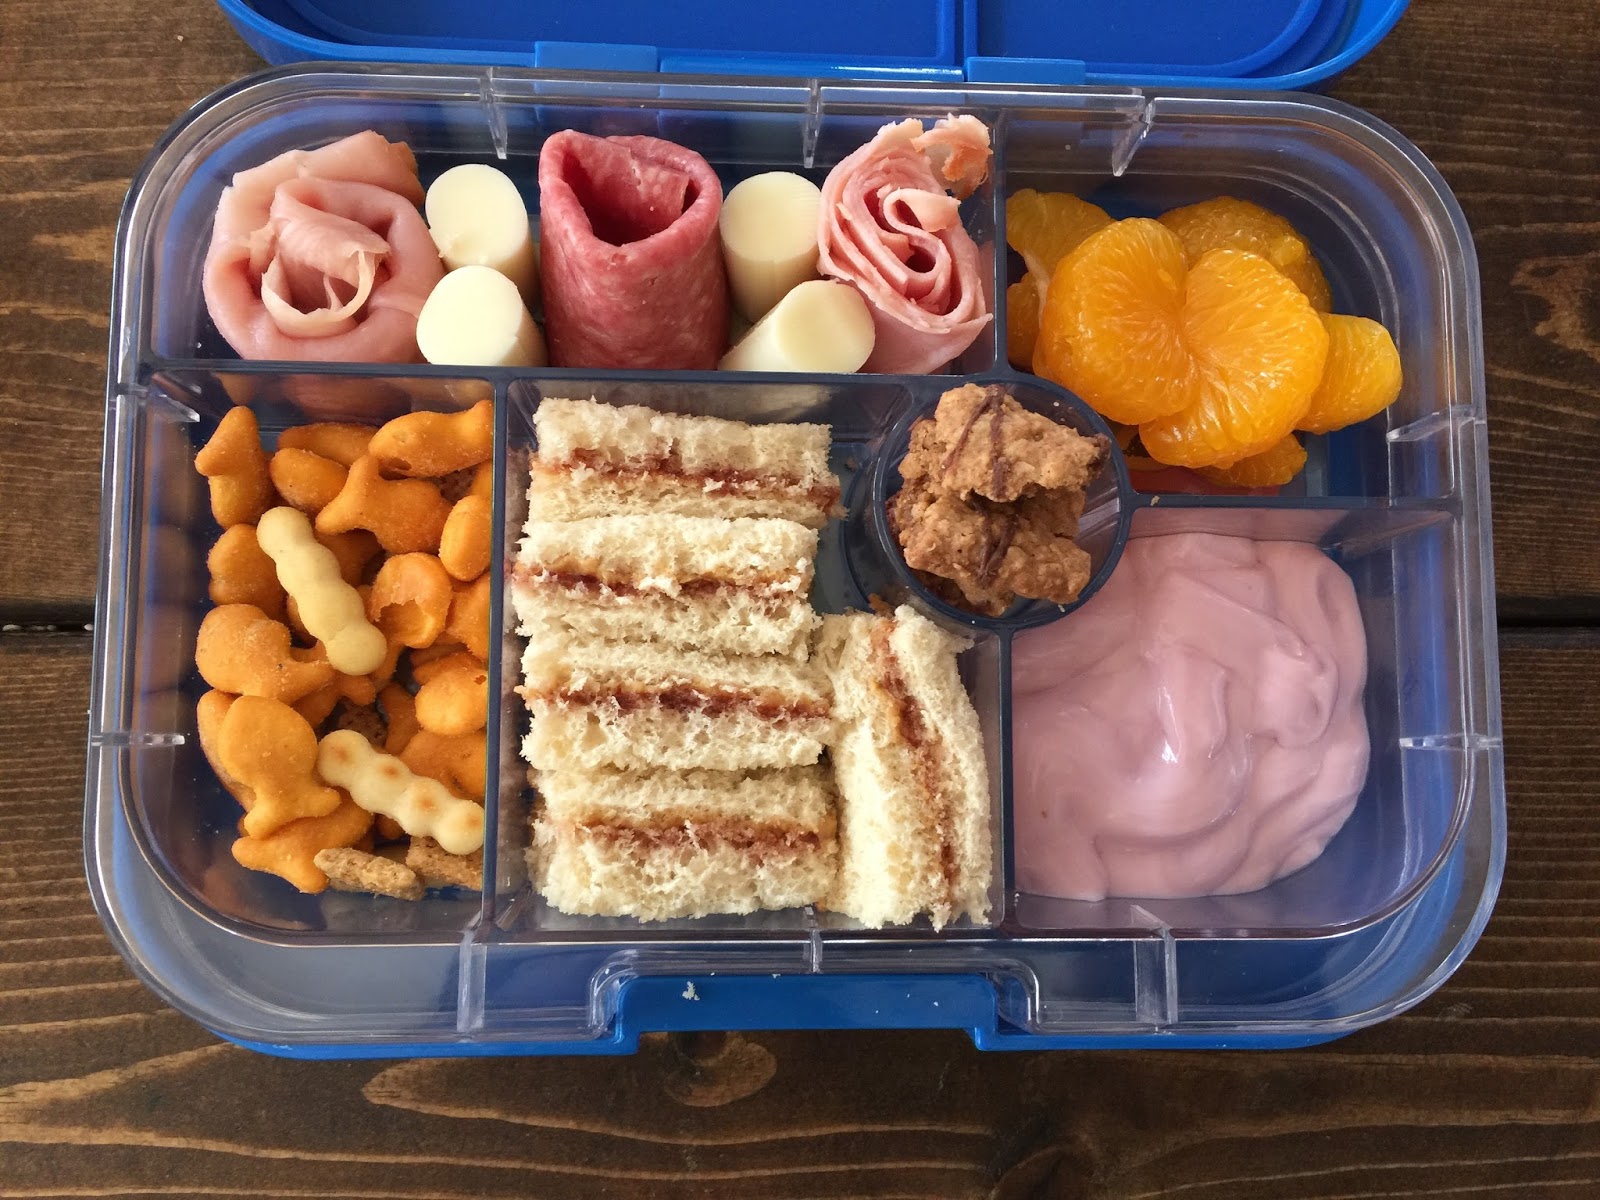 Bento box ideas for kids: 6 school lunch ideas — The Organized Mom